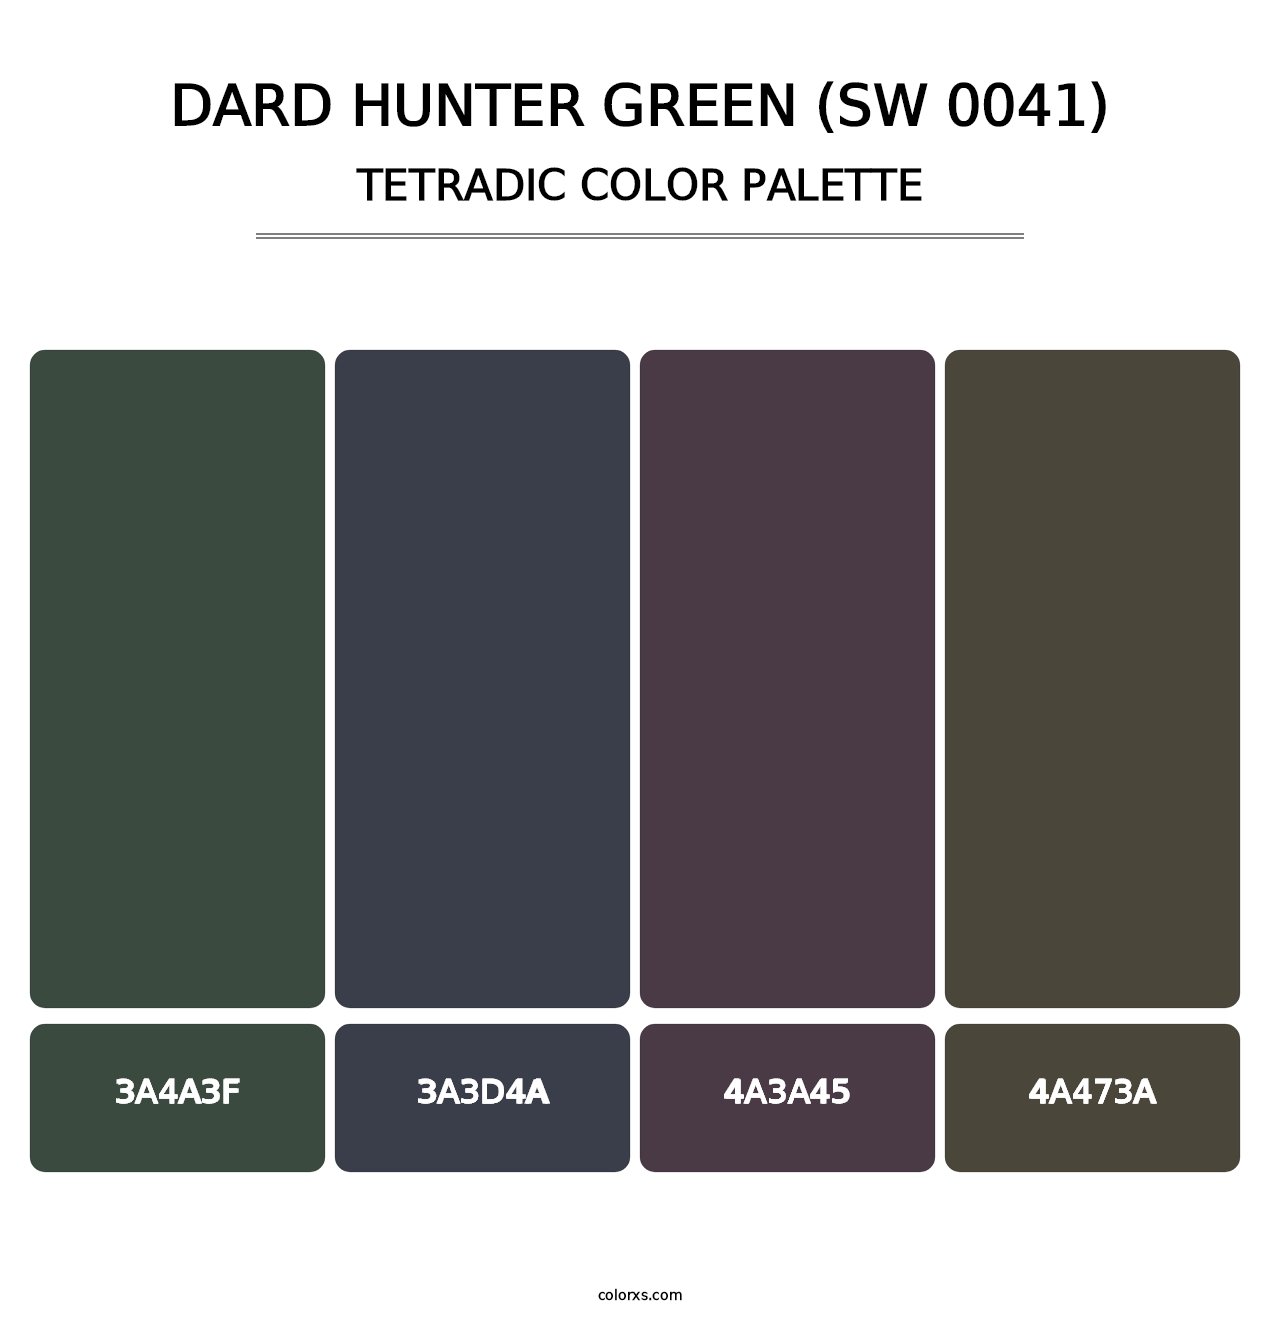 Dard Hunter Green (SW 0041) - Tetradic Color Palette